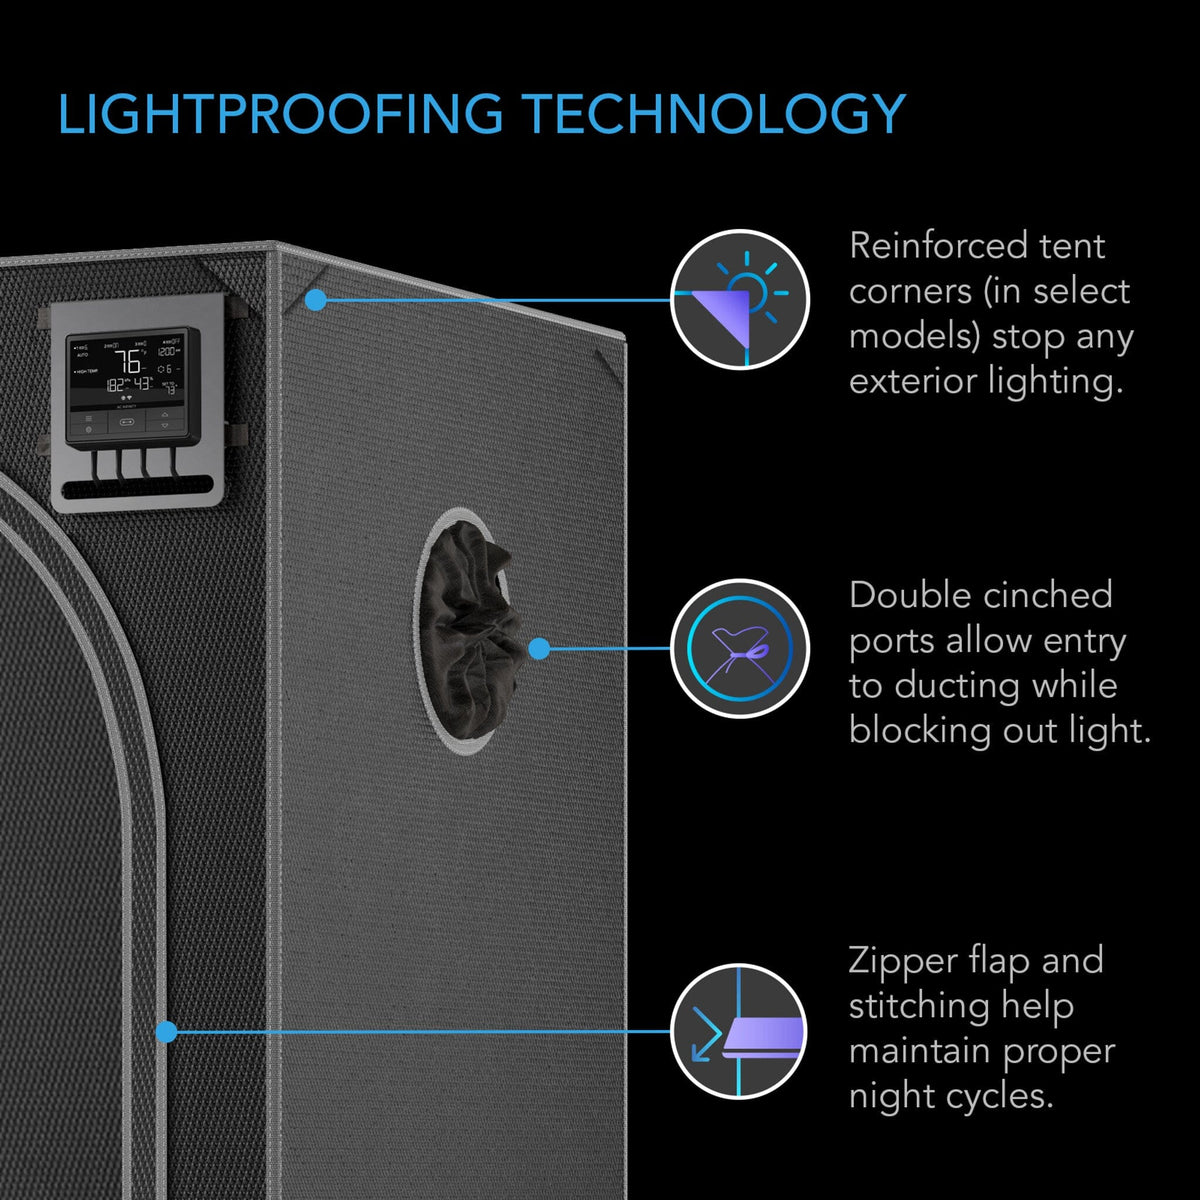 Light proofint technology